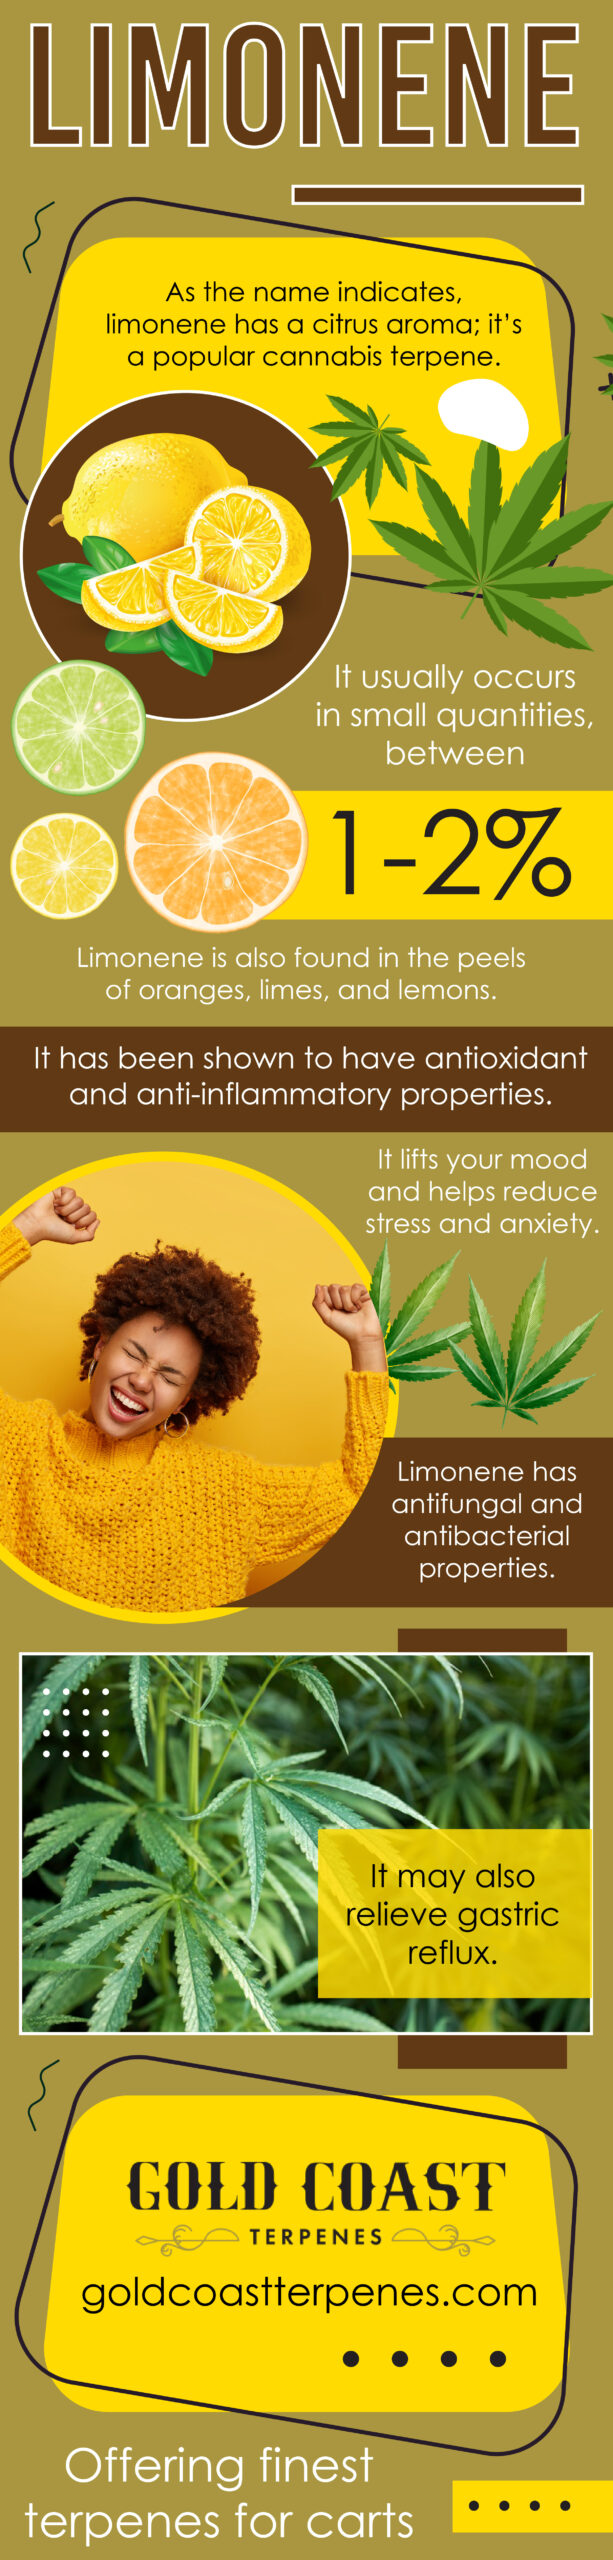 About Limonene - Infograph